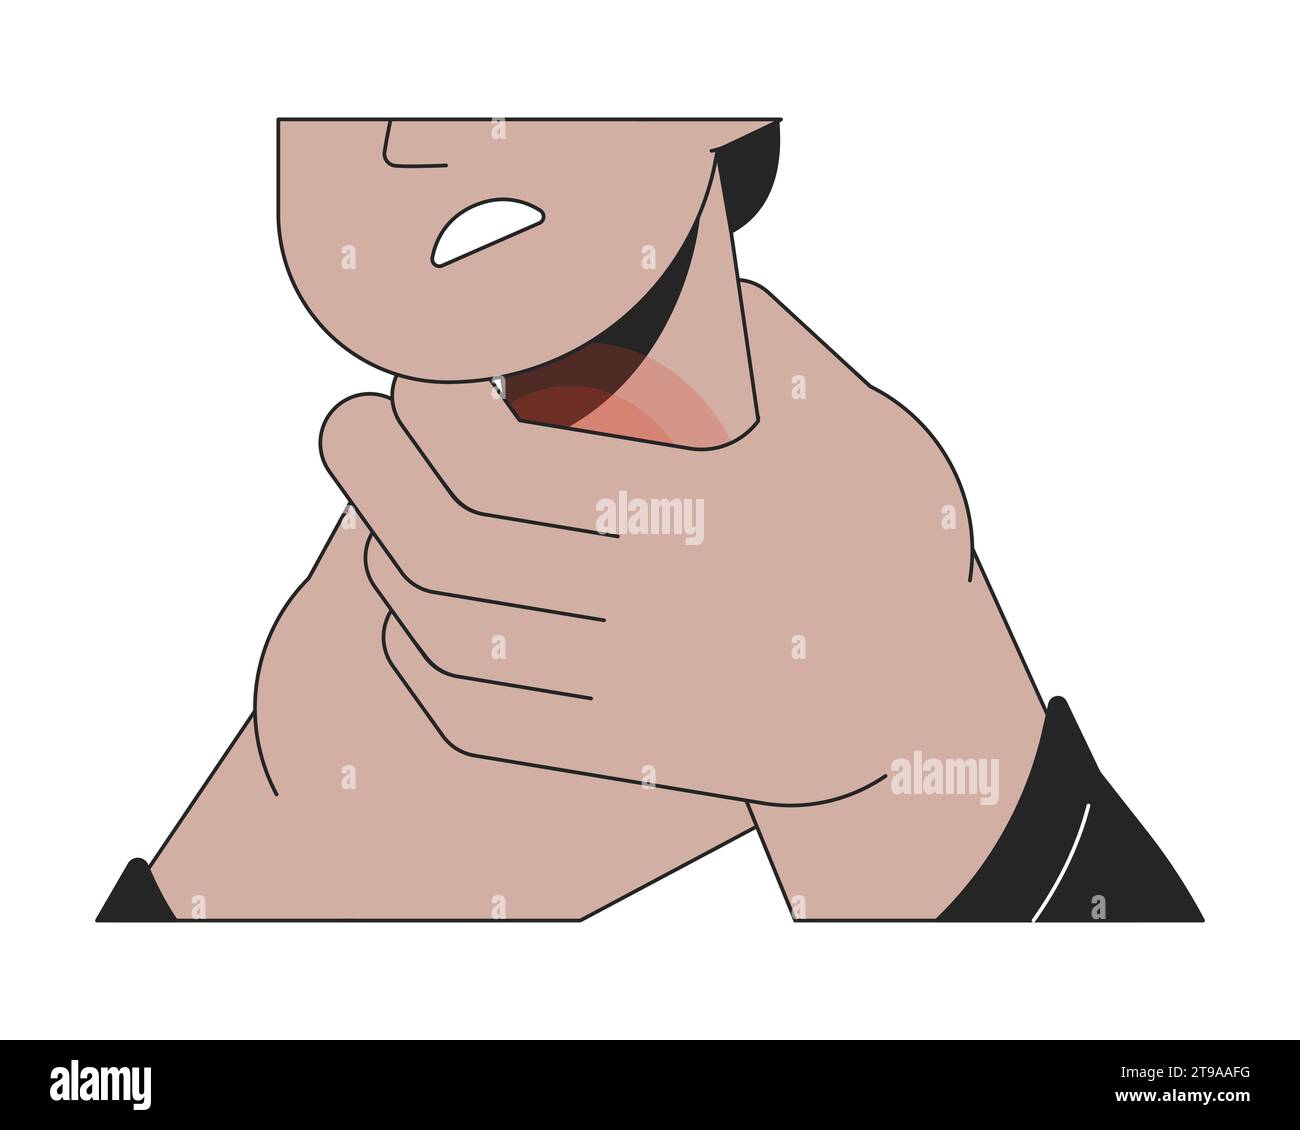 Indian man hands around sore throat 2D linear cartoon hands close-up Stock Vector